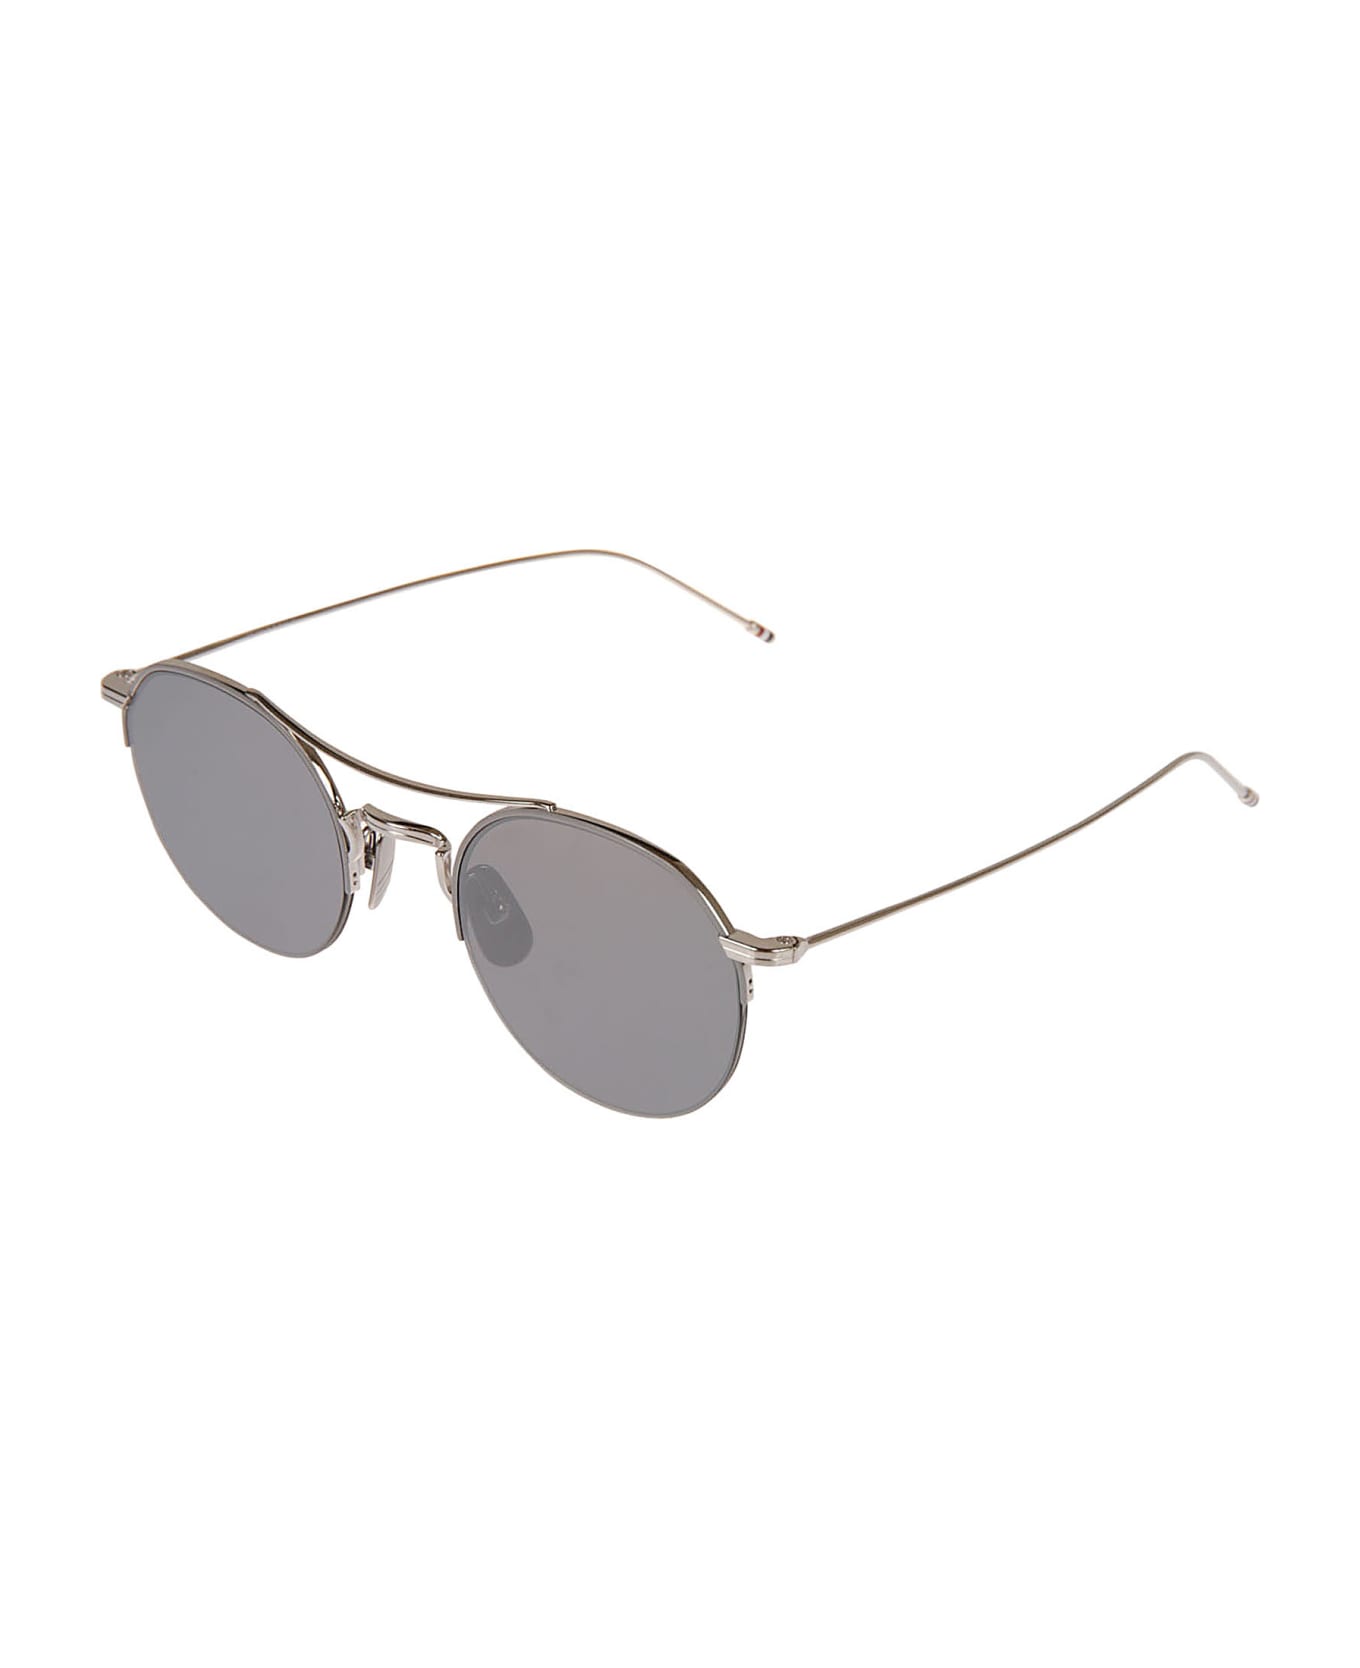 Thom Browne Round Frame W/ Top Bar Sunglasses - Silver